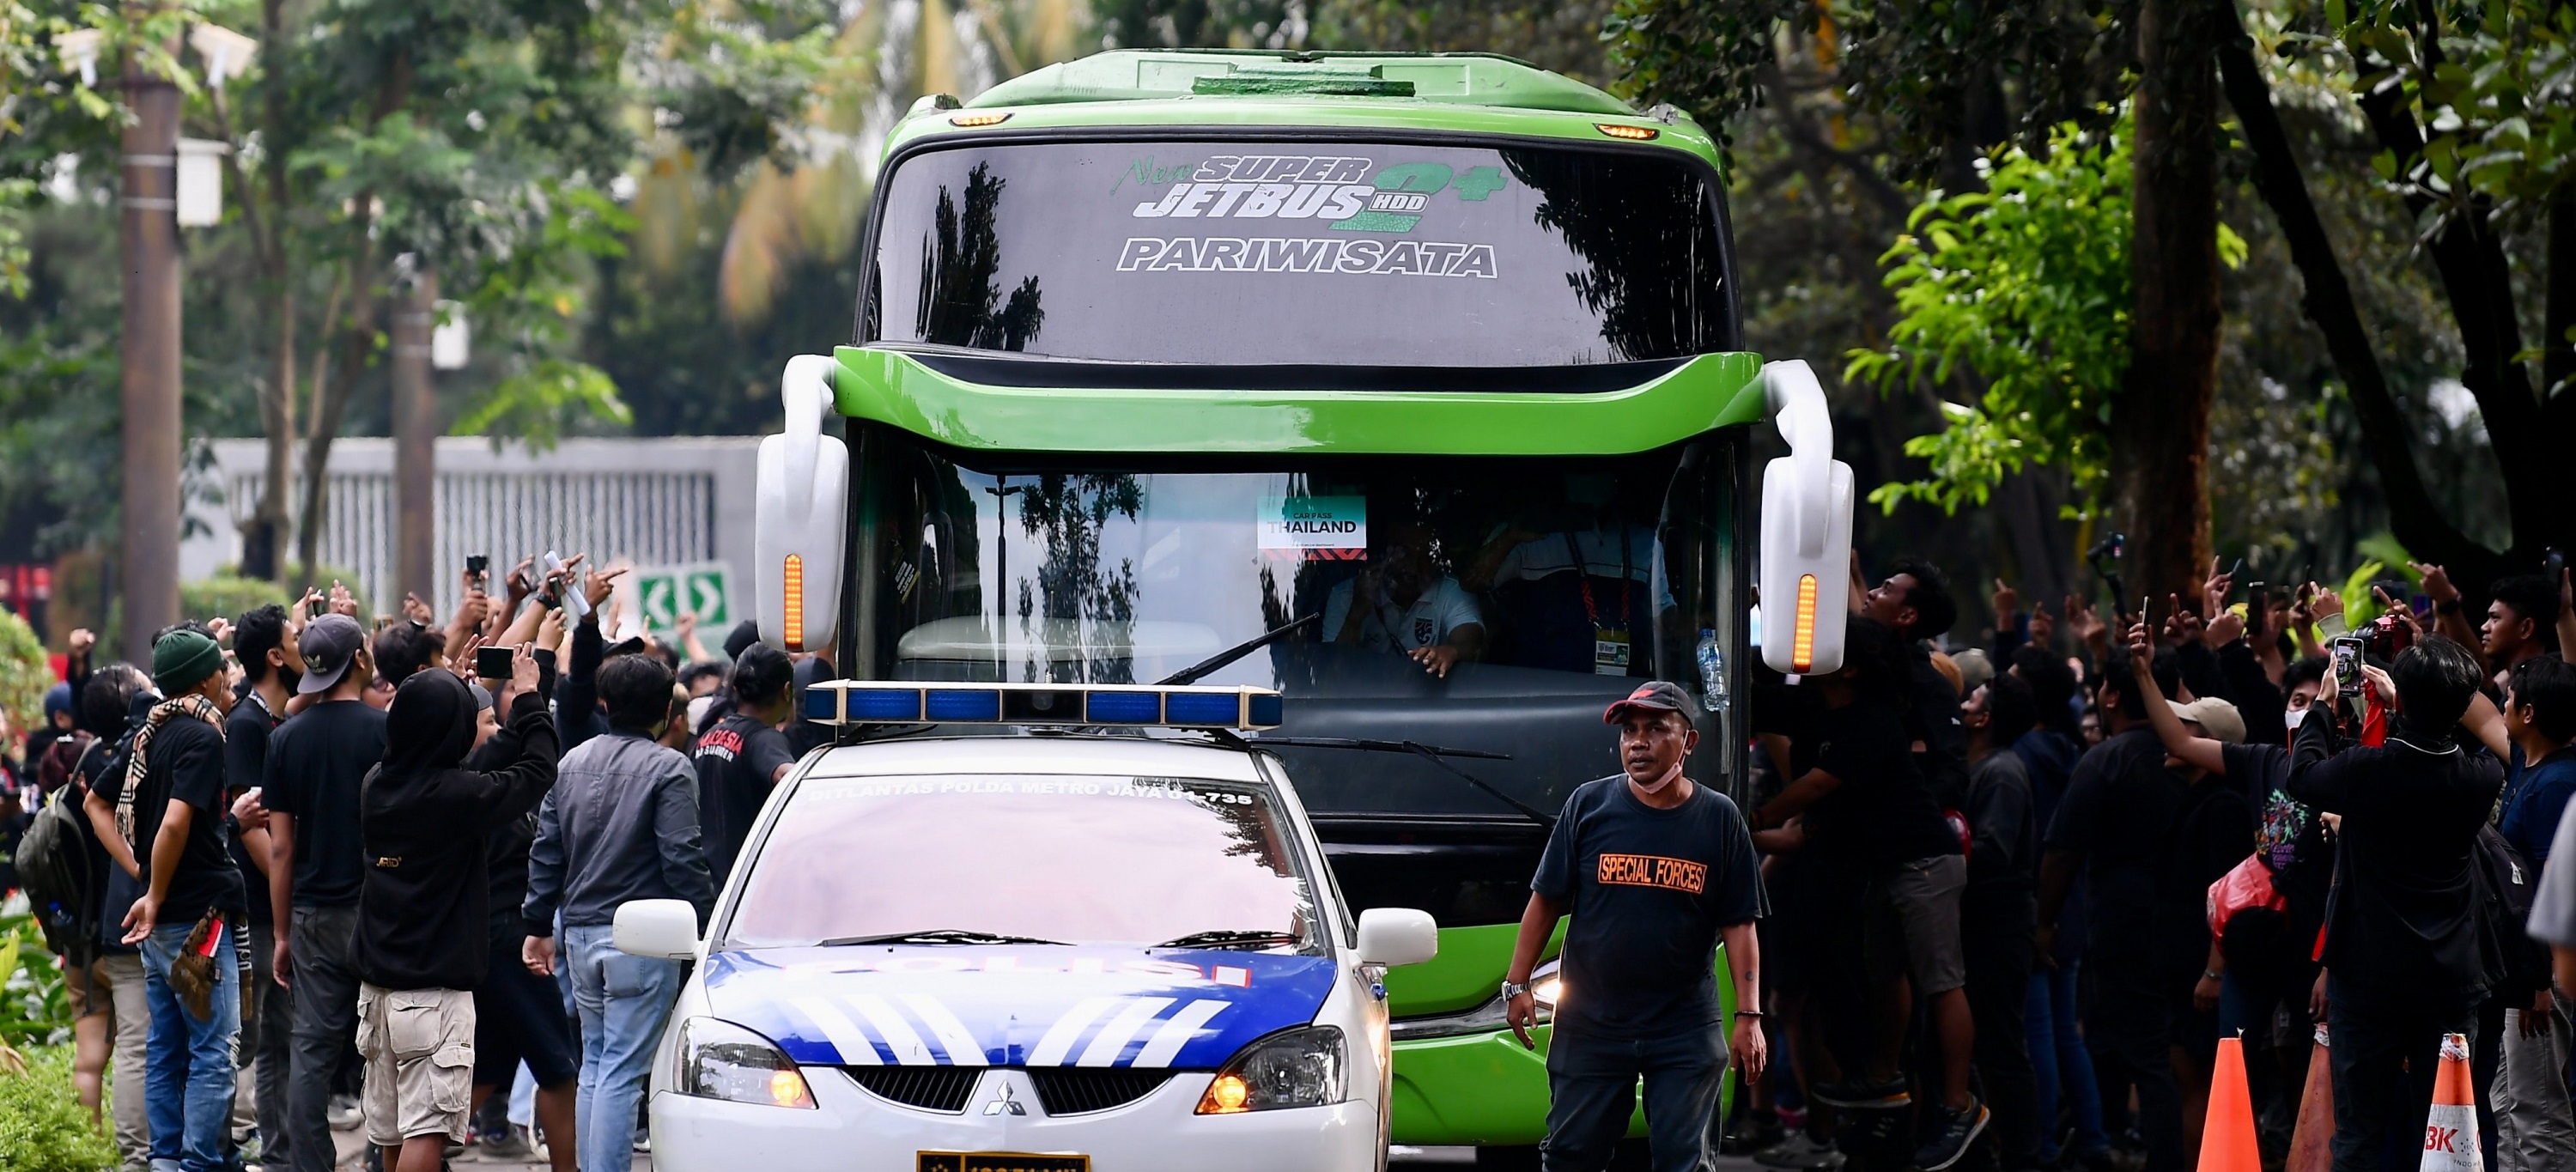 Alexandre Polking Sedih Soal Insiden Pelemparan Bus Timnas Thailand